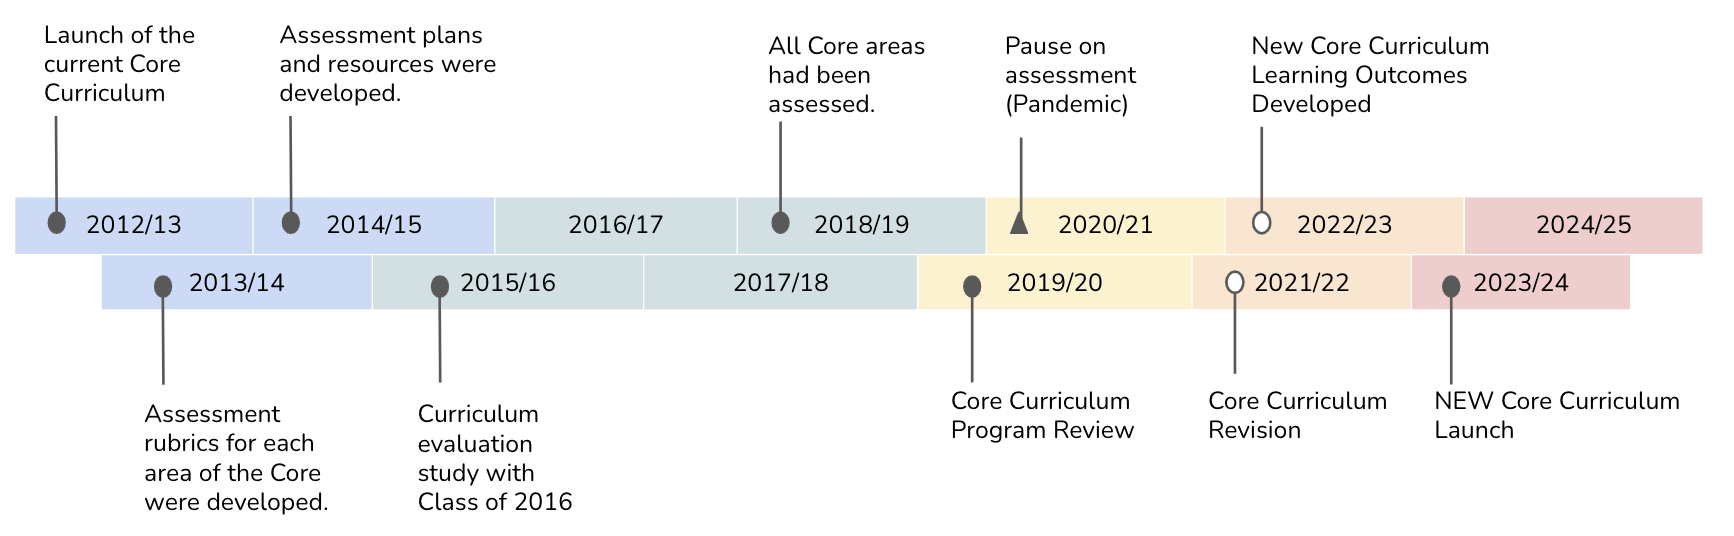 Core Curriculum Assessment Timeline